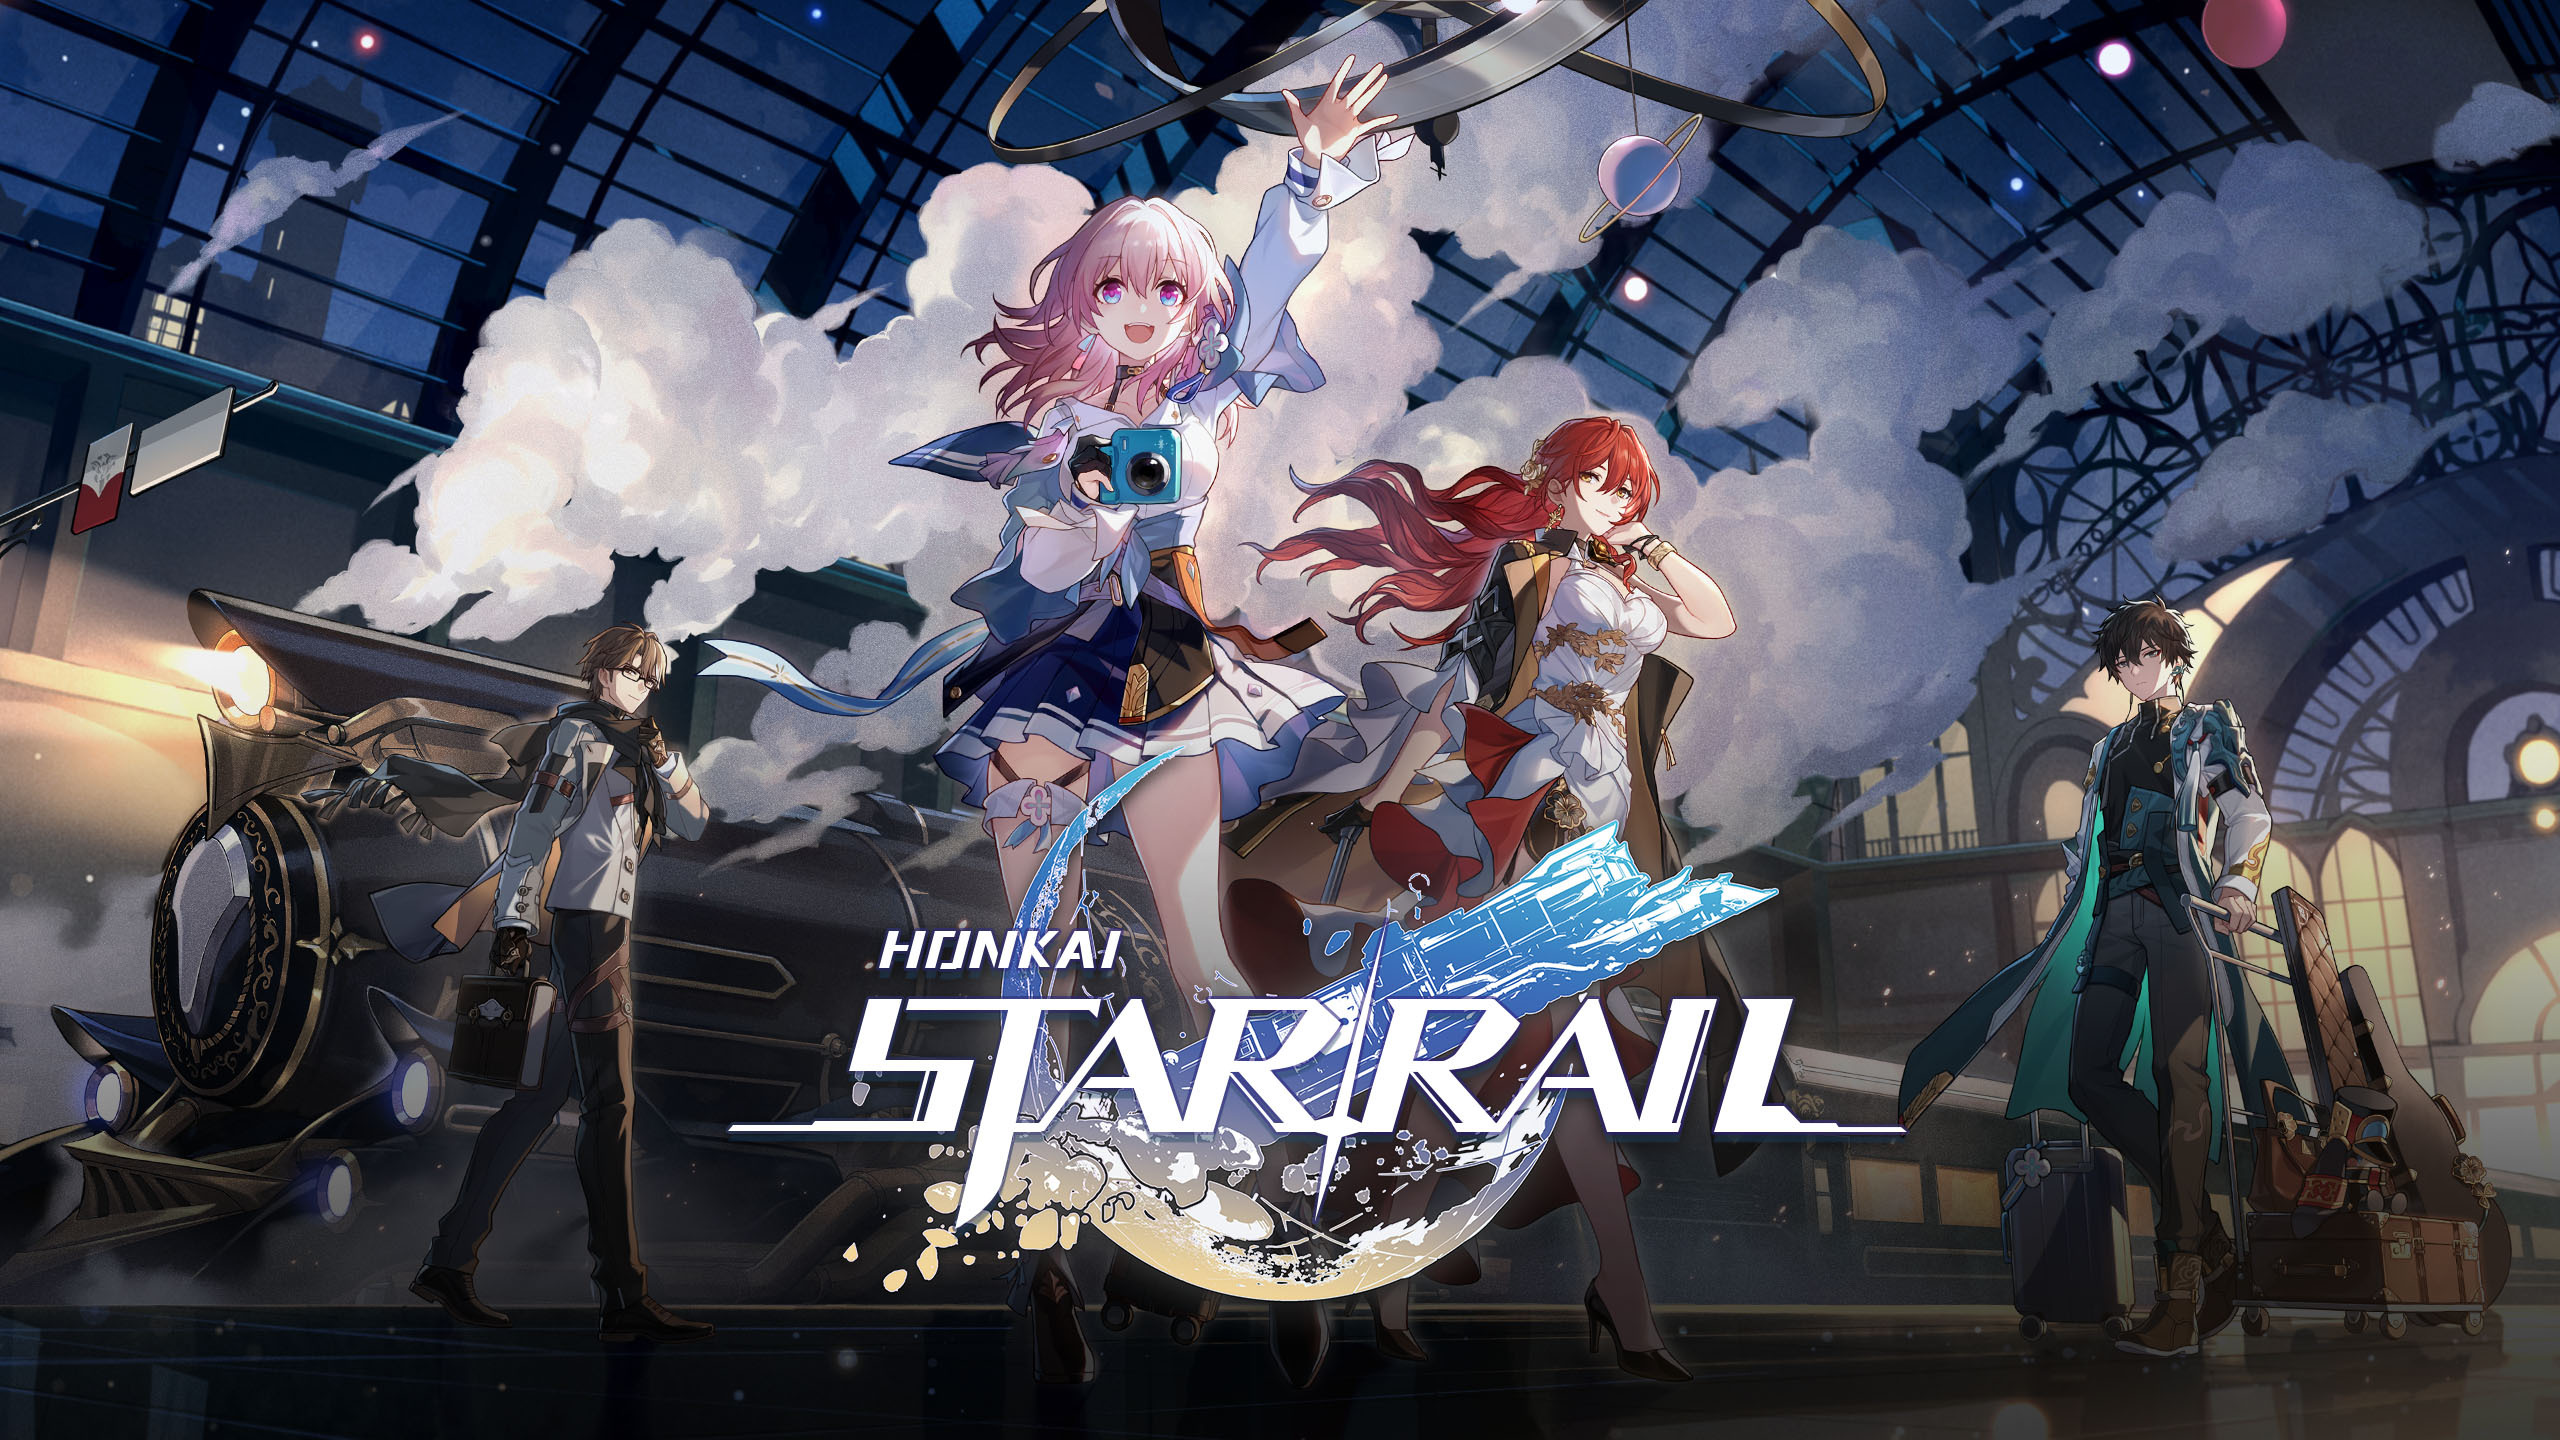 Next Honkai Star Rail Banner: Version 1.2 and beyond